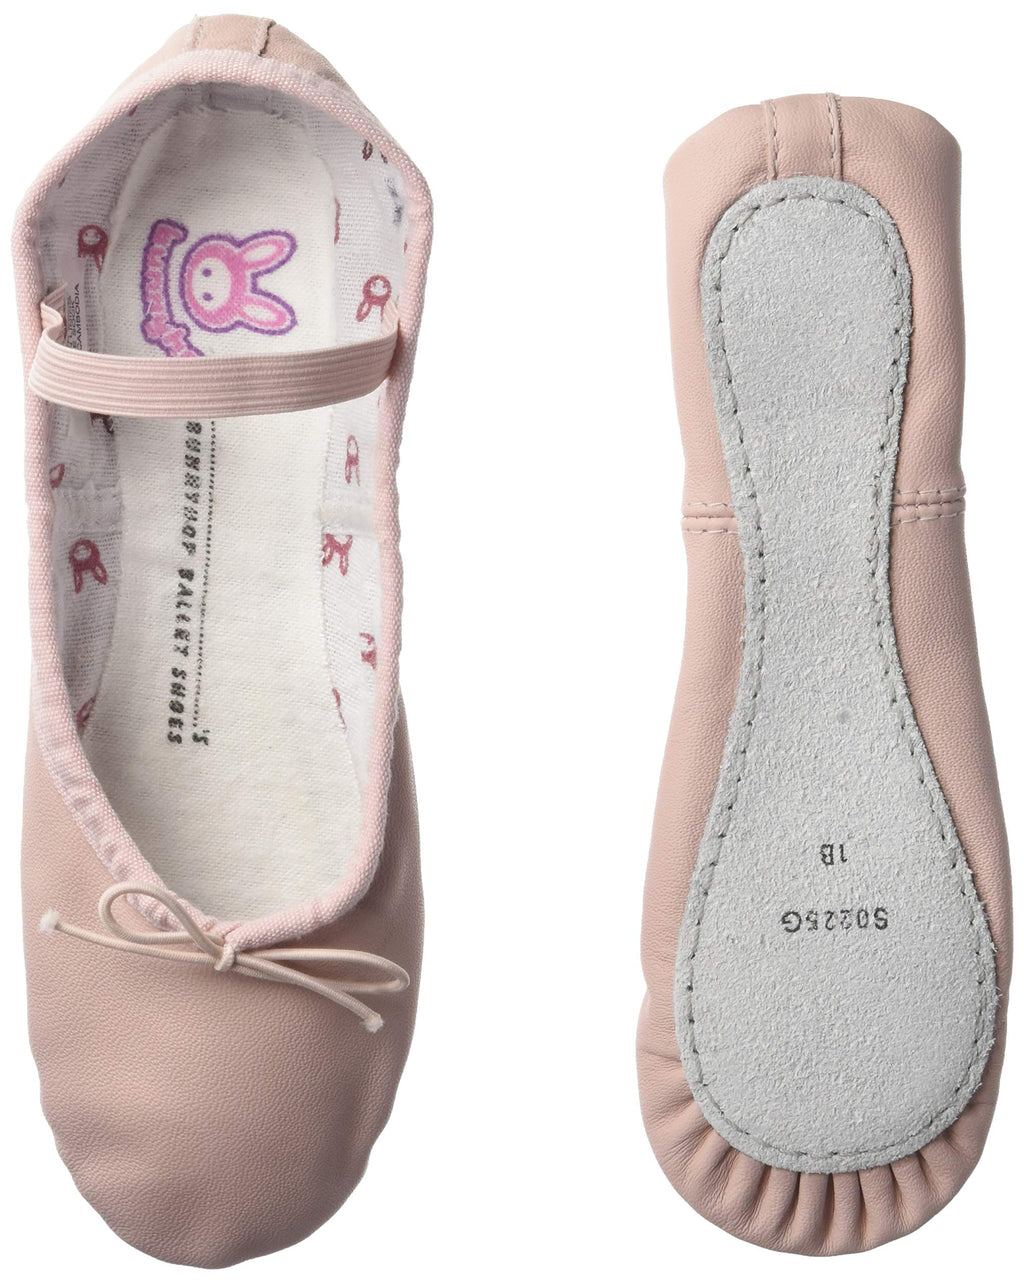 [AUSTRALIA] - Bloch Dance Girl's Bunnyhop Full Sole Leather Ballet Slipper/Shoe, Pink, Narrow Big Kid 